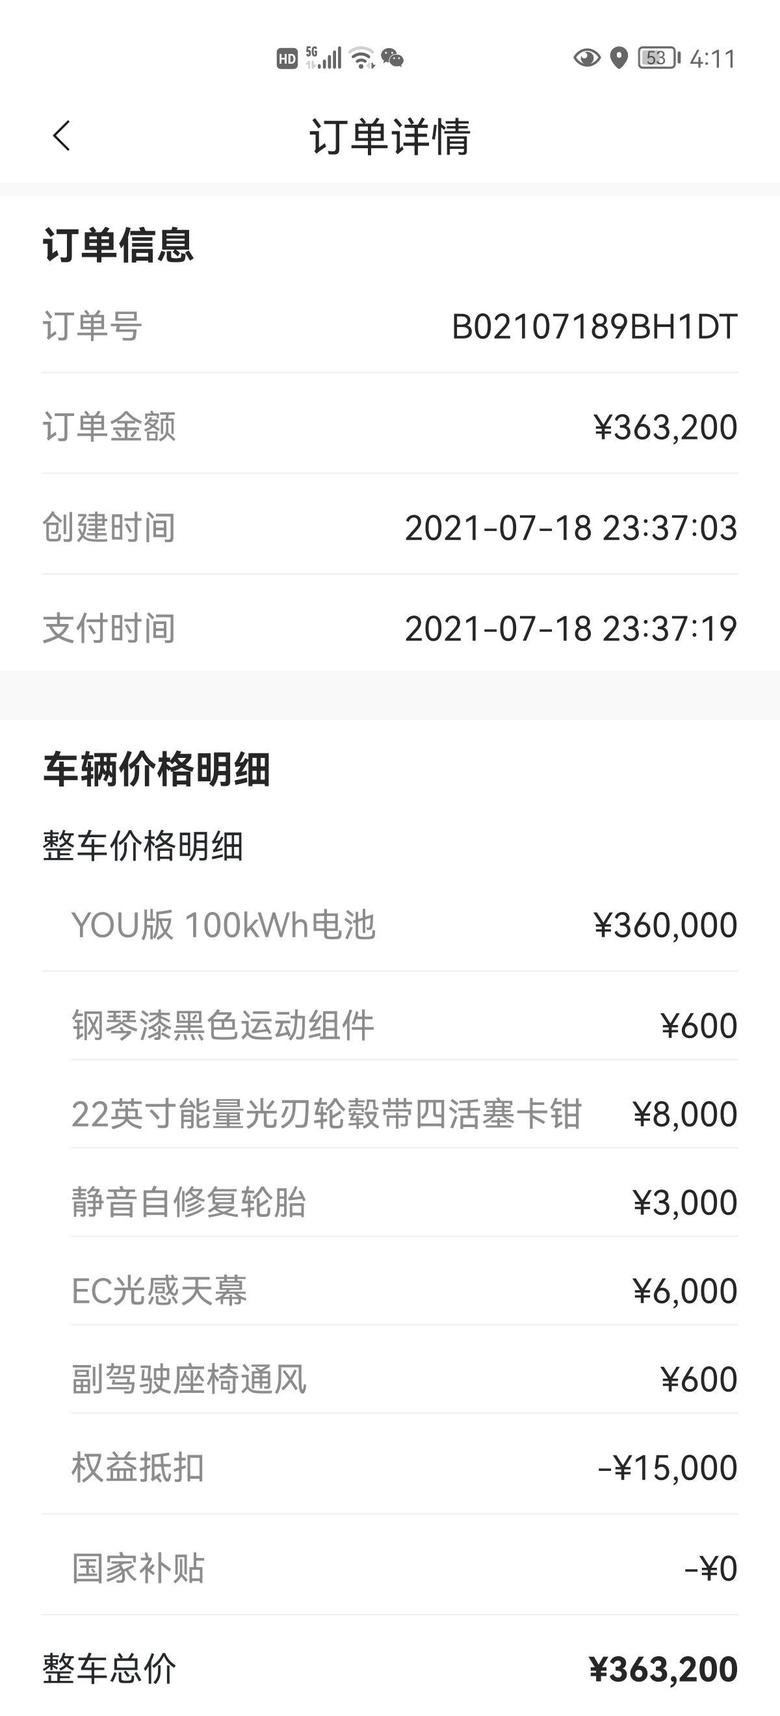 zeekr 001 原价转7月18号的定金。还没锁单。享受5000 2万。